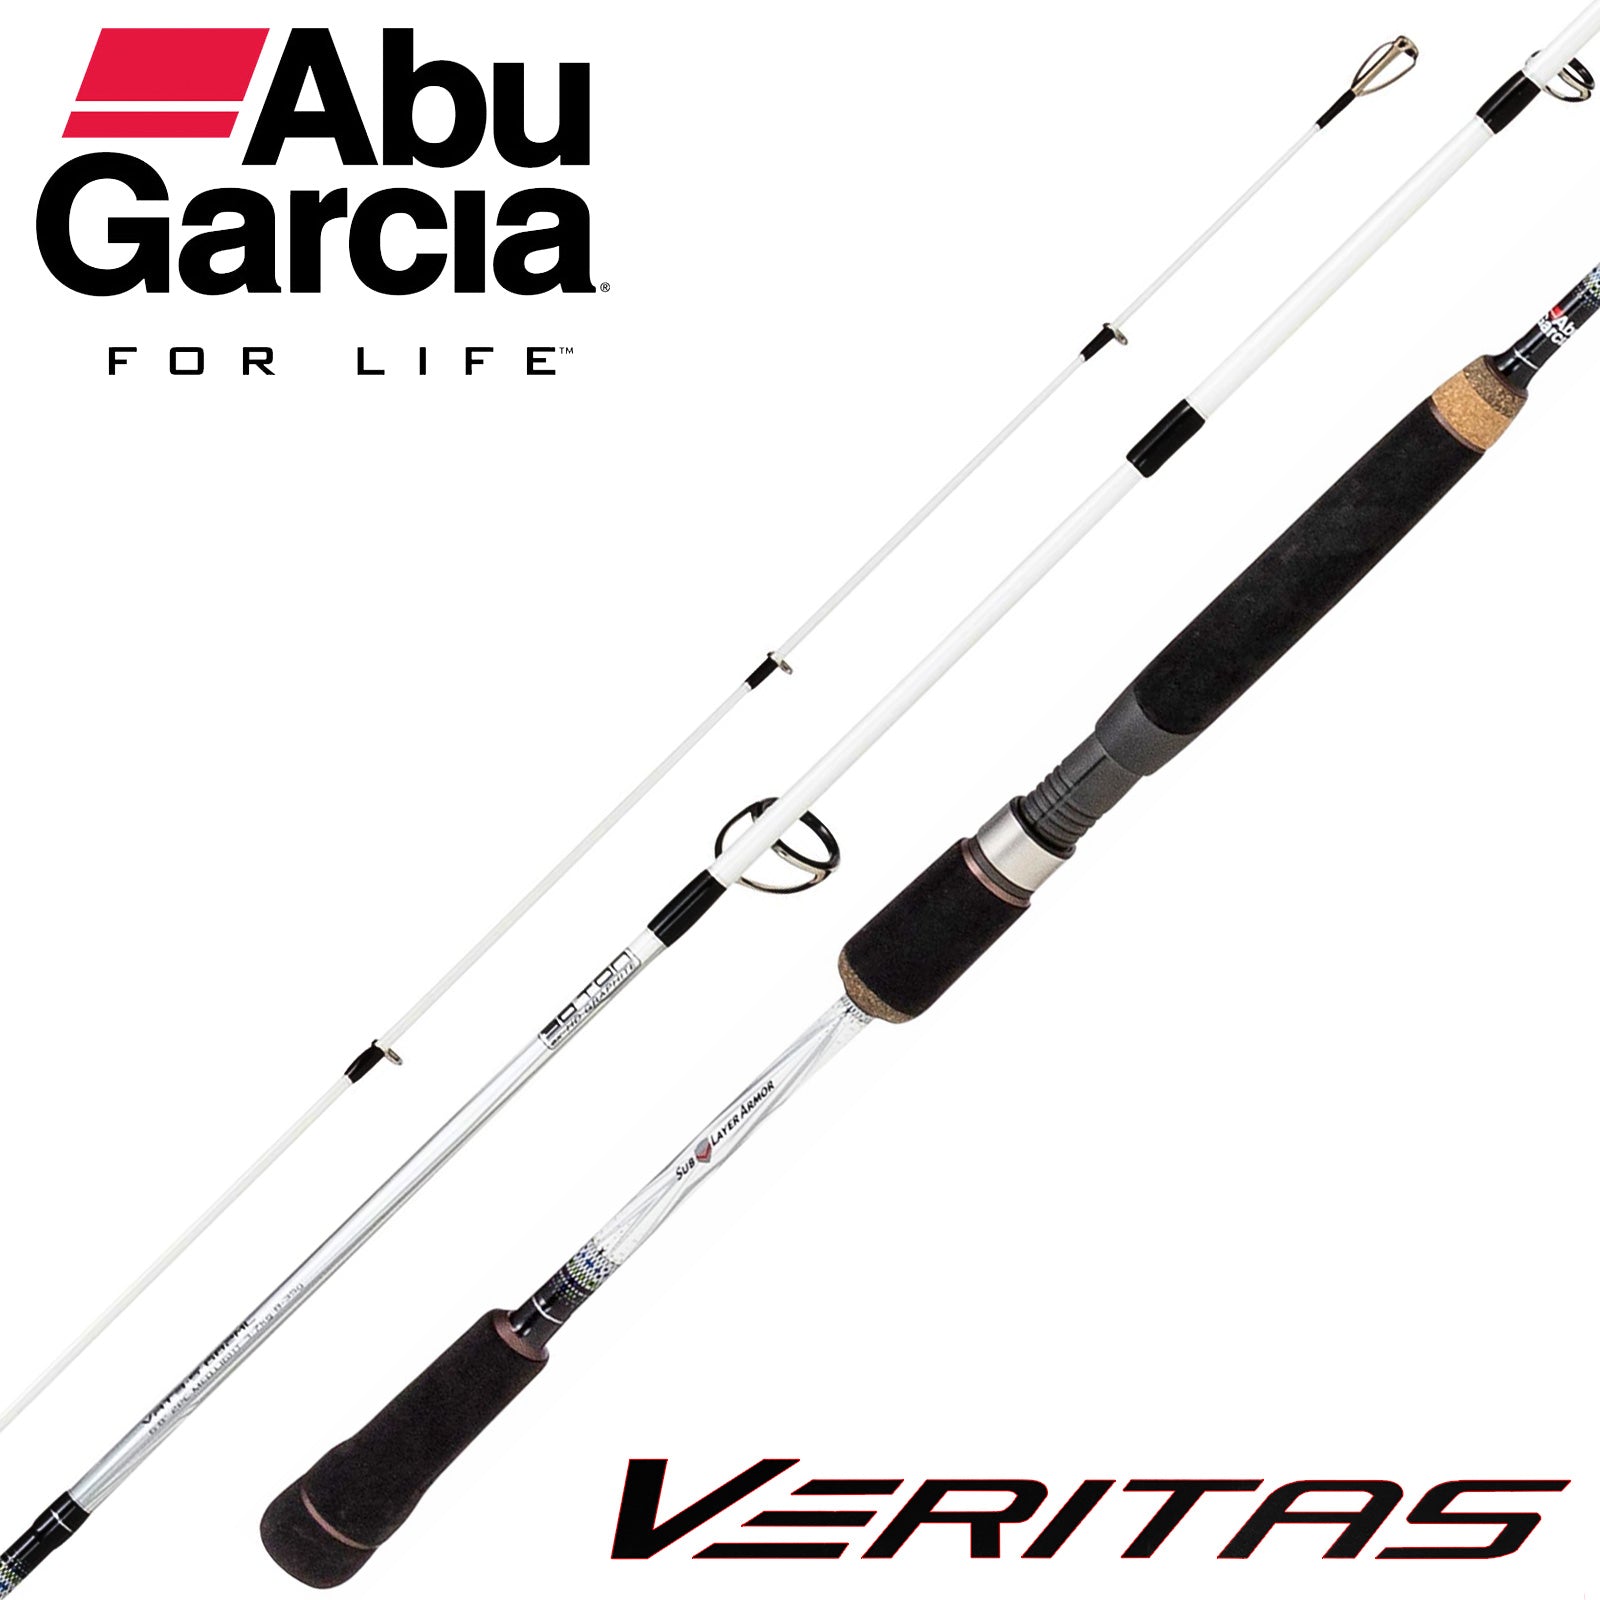 Abu Garcia Veritas 3.0 Rod – Anglerpower Fishing Tackle